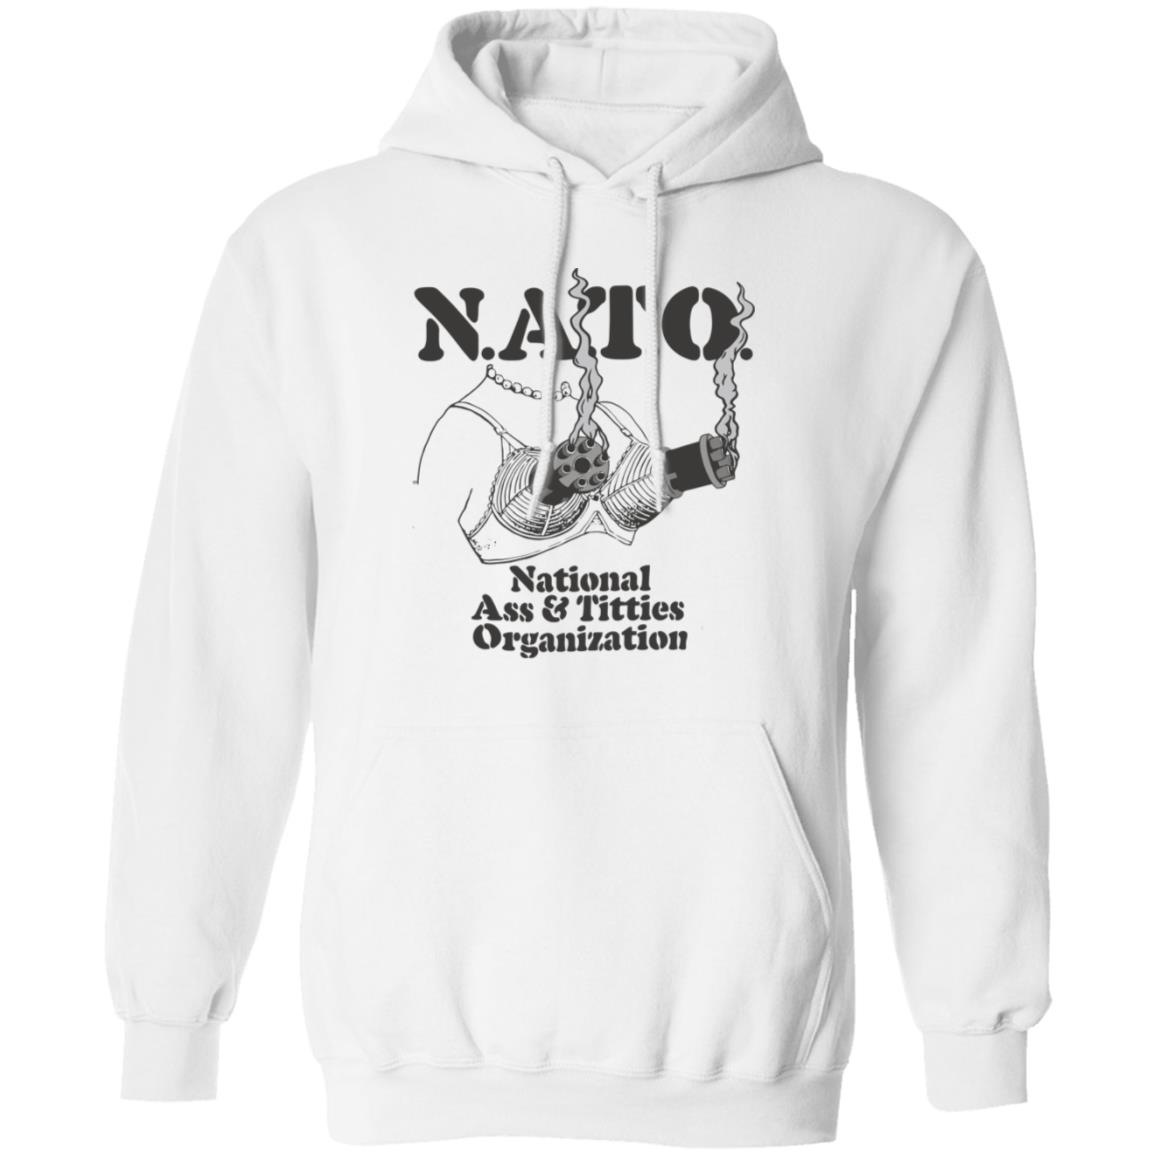 Boob Nato National Ass And Titties Organization Shirt 1